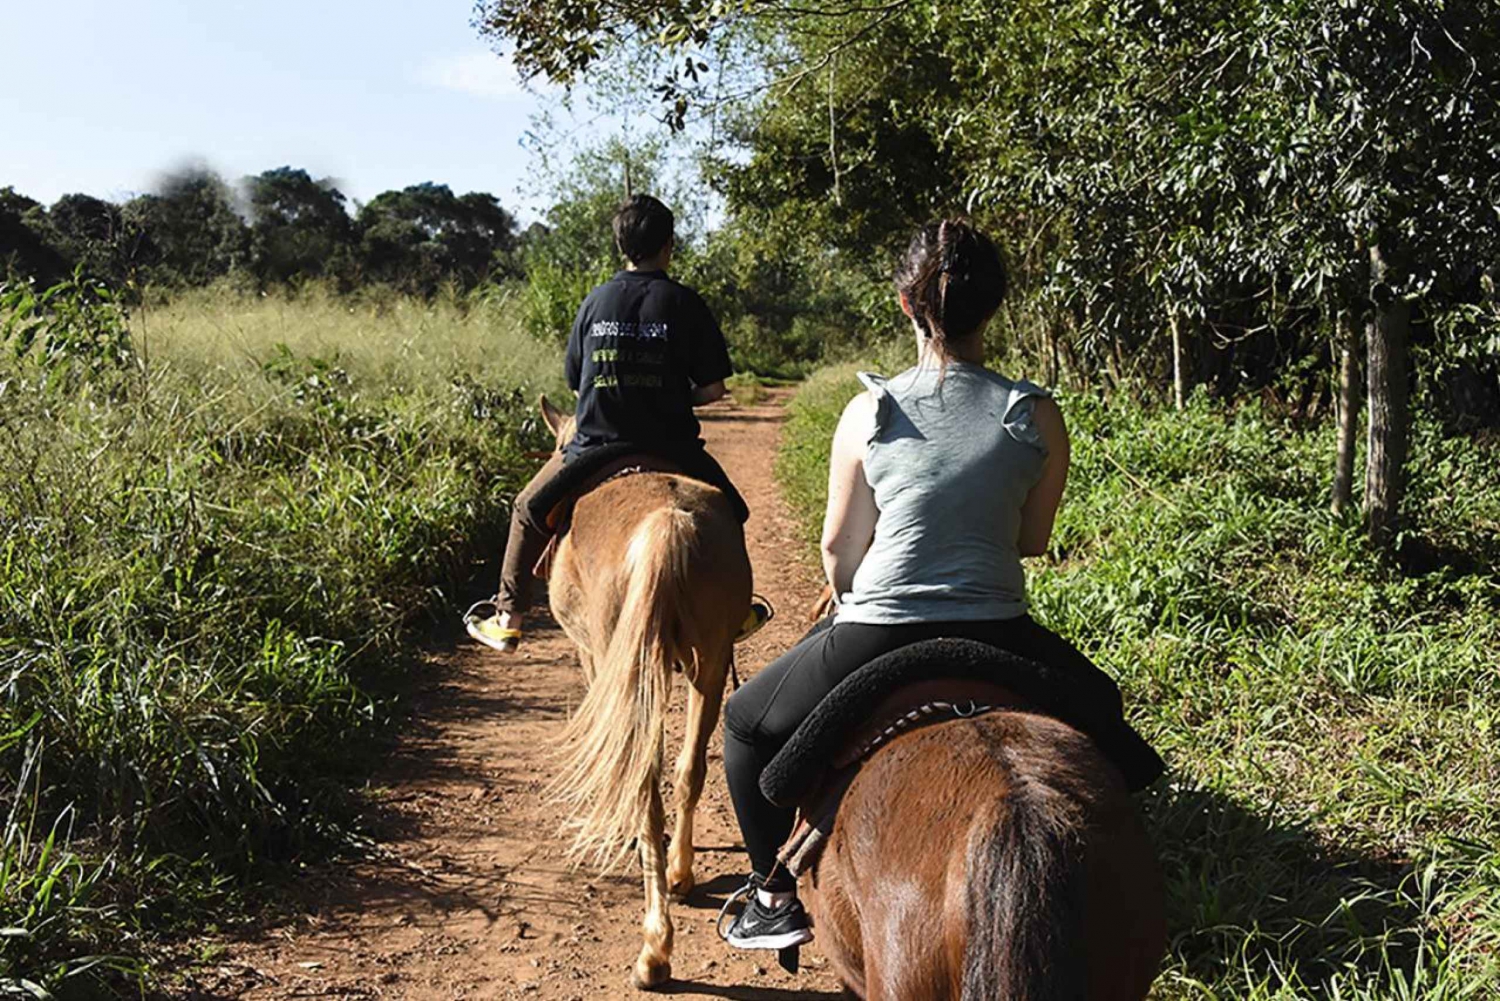 Puerto Iguazu: Jungle Horseback Ride with Guaraní Community